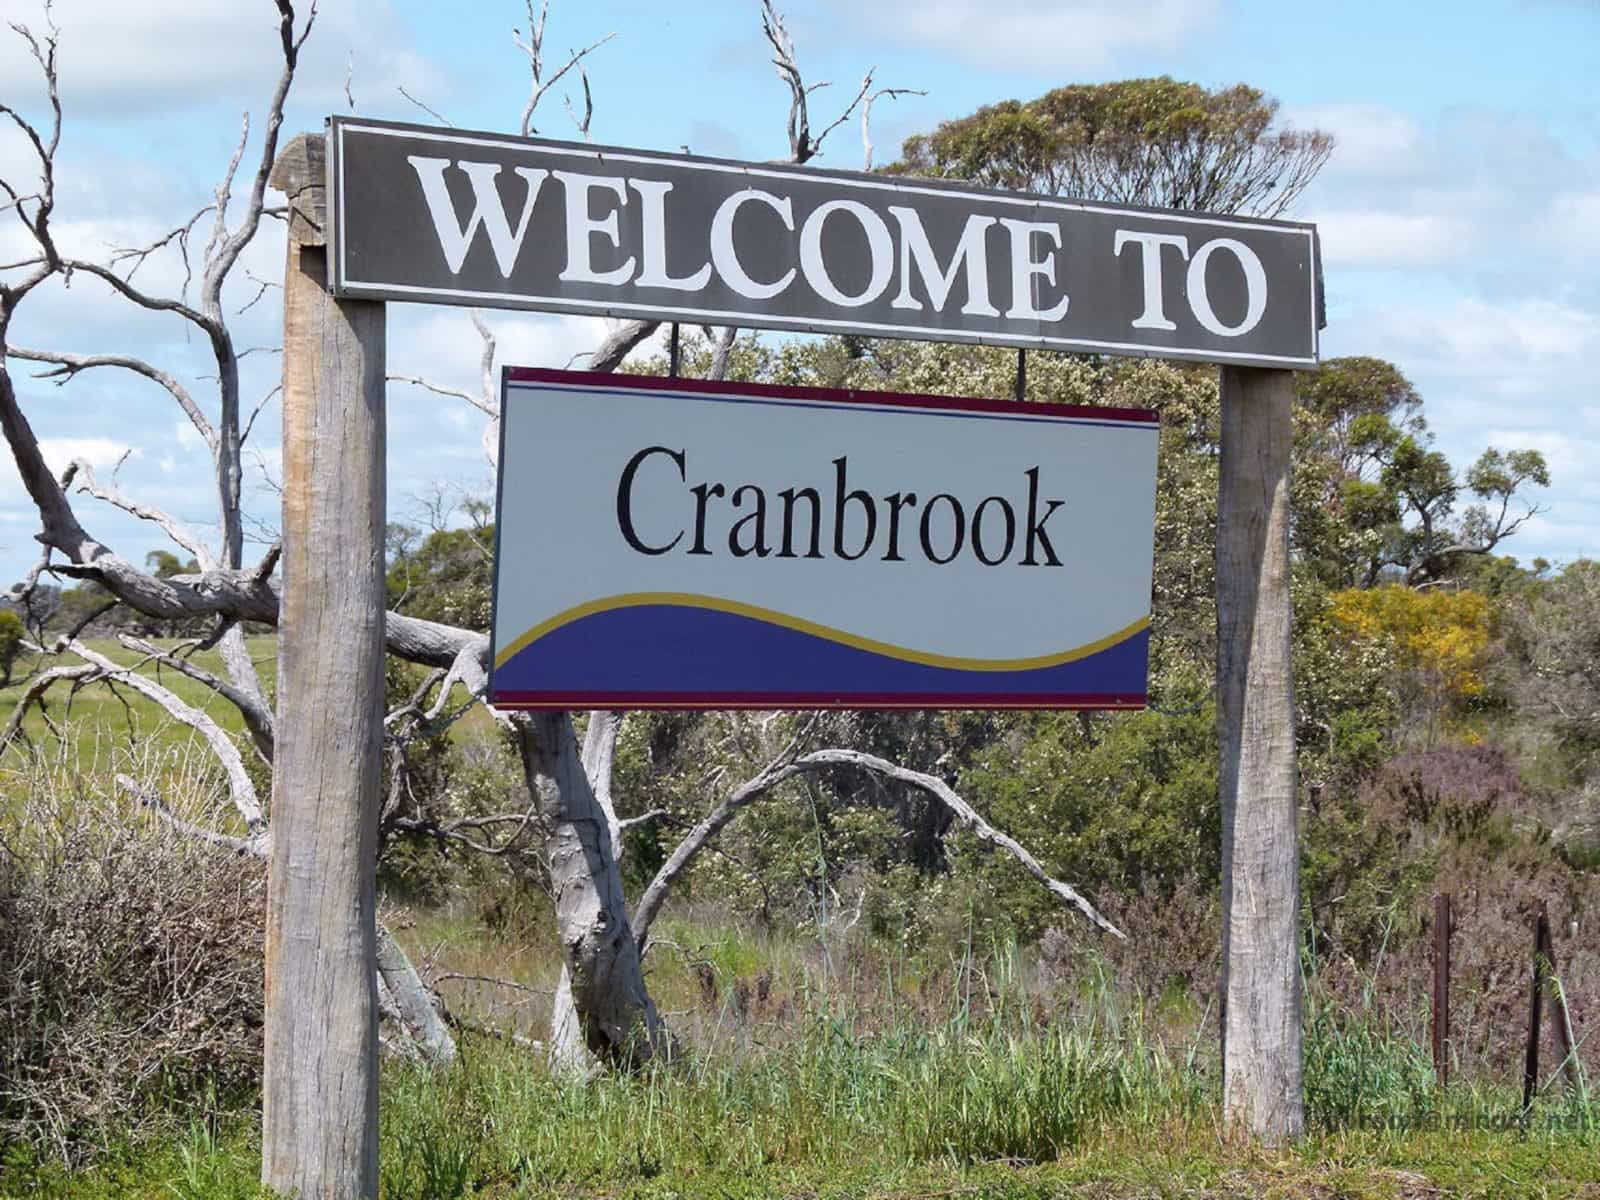 Cranbrook, Western Australia